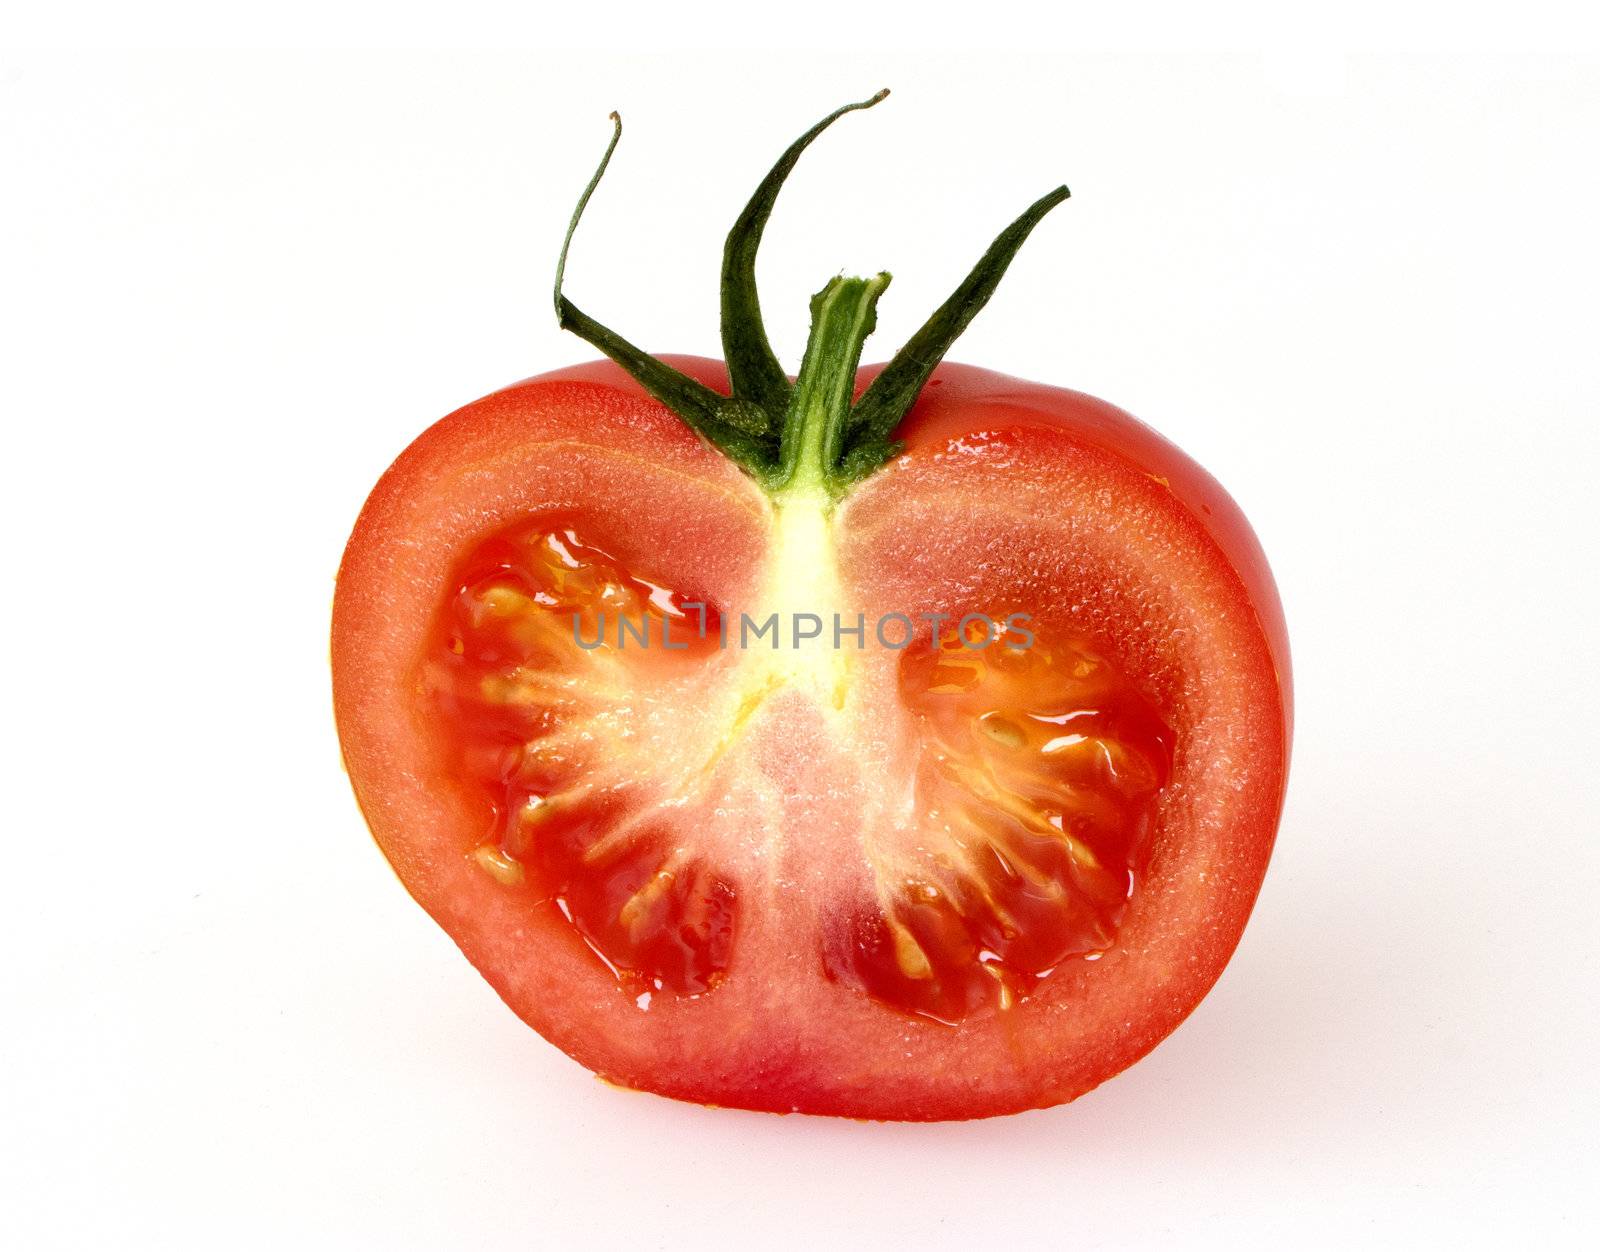 Tomato slice on white background.